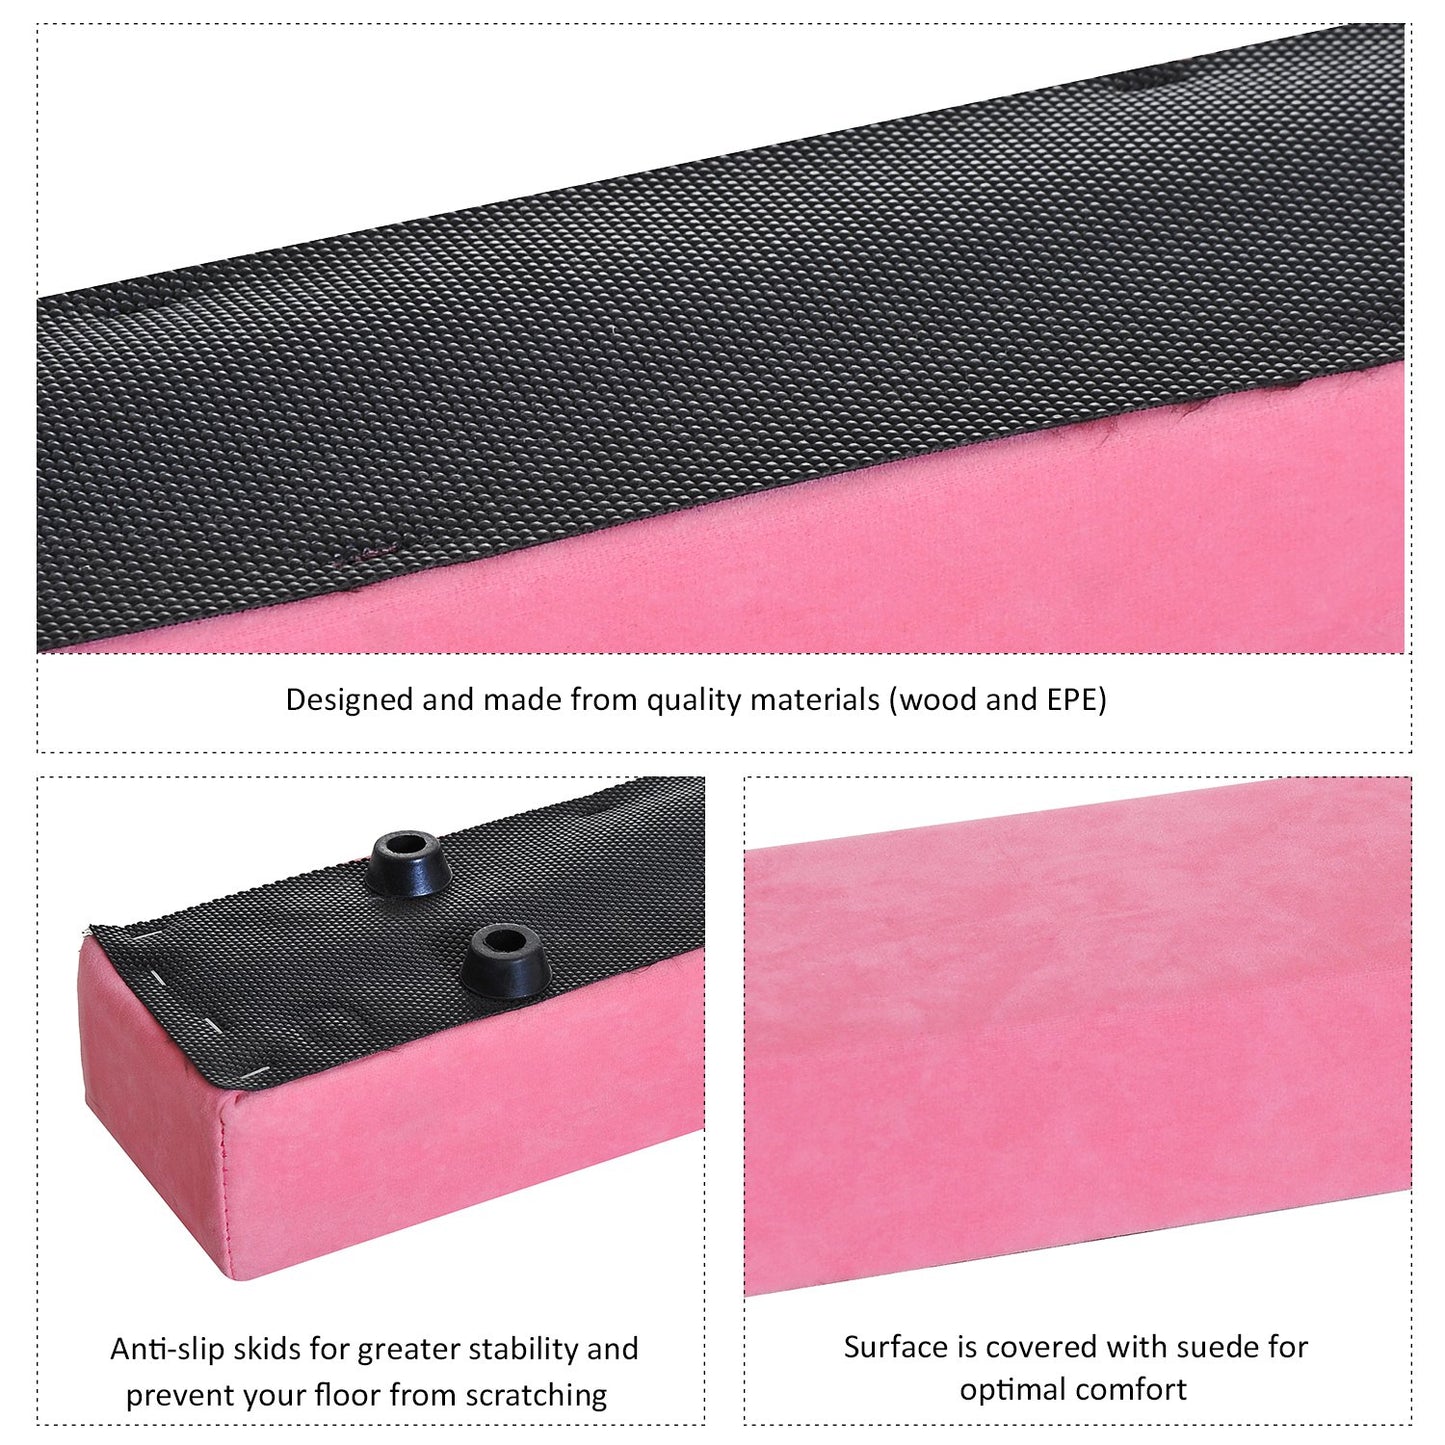 HOMCOM Suede Upholstered Wooden Folding Balance Beam Trainer Pink